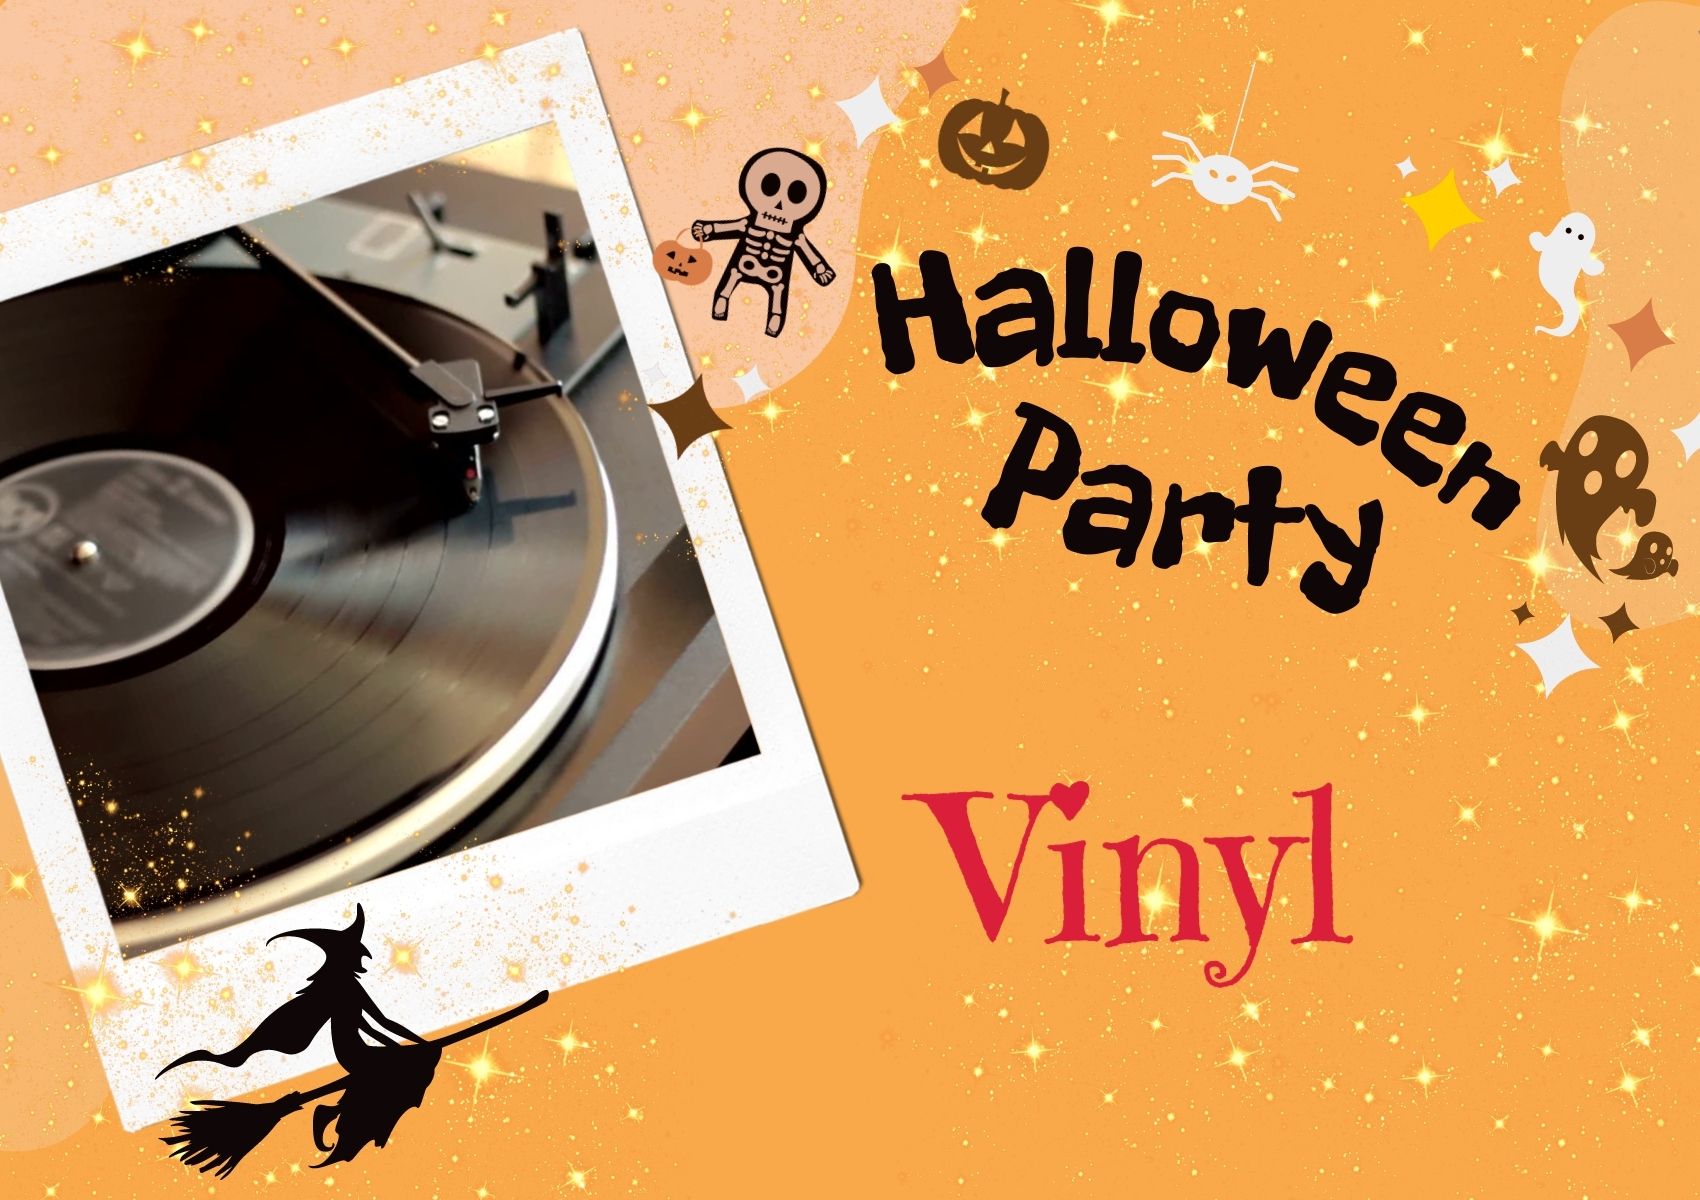 Halloween Party 2022 Vinyl Items